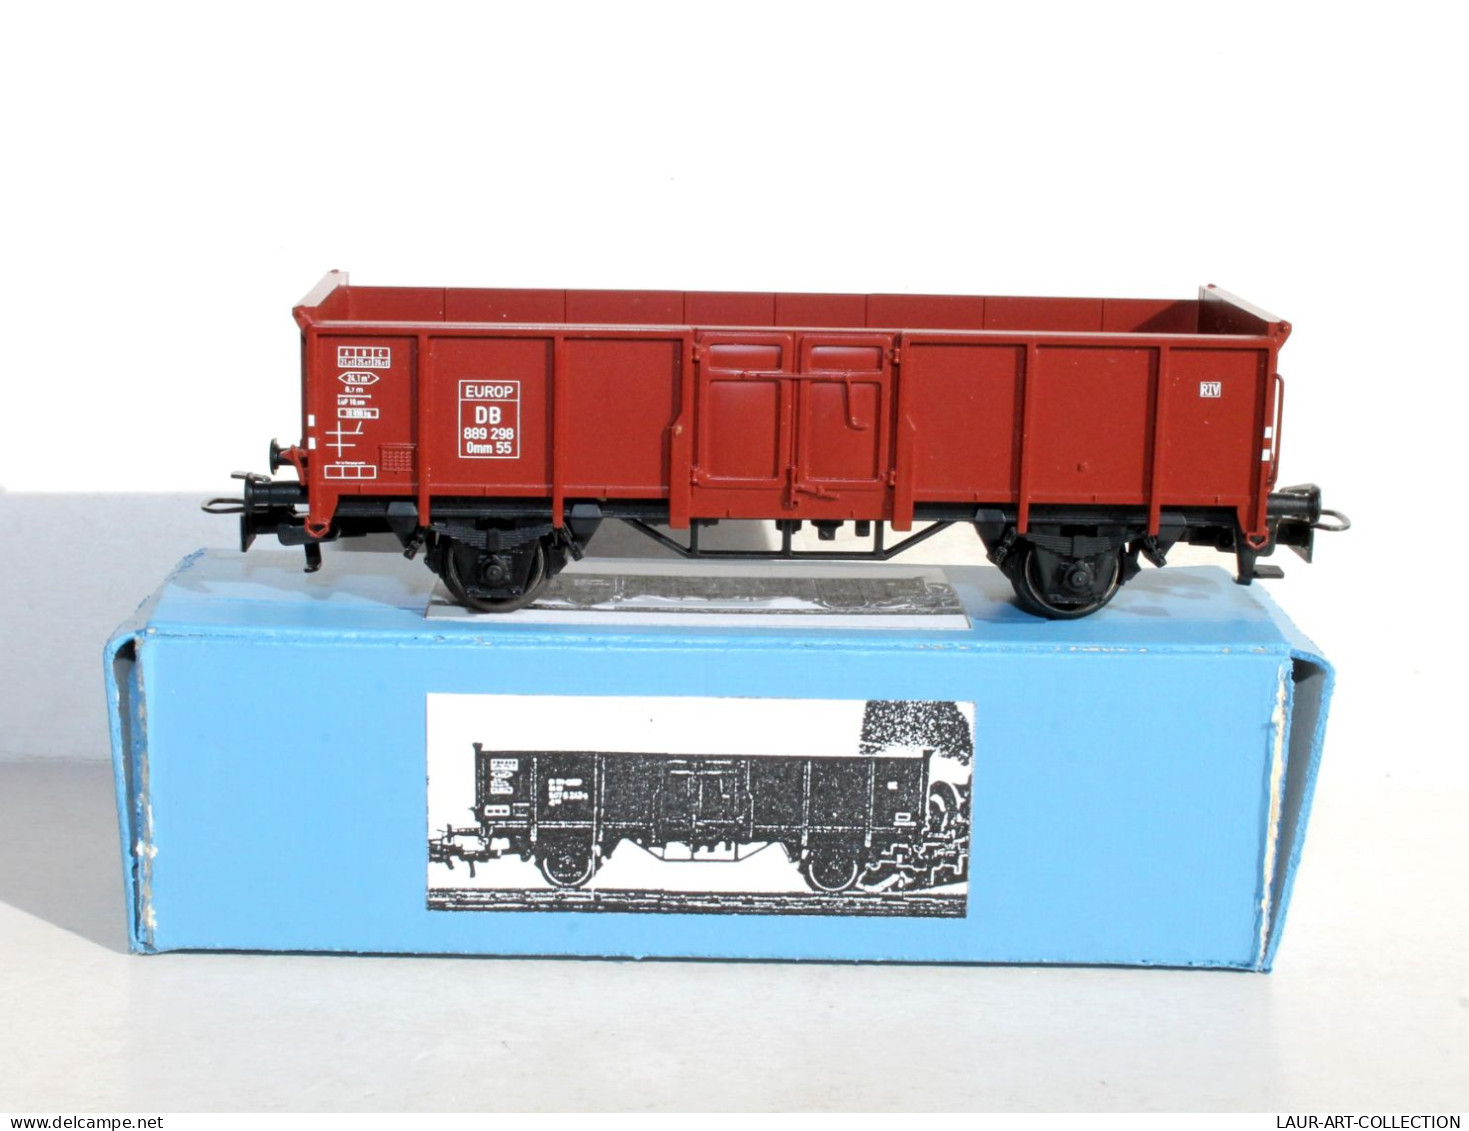 MARKLIN HO N°4465 WAGON TOMBEREAU DB 889 298, TRANSPORT MARCHANDISE / MINIATURE TRAIN MODELISME FERROVIAIRE (1002.34) - Güterwaggons